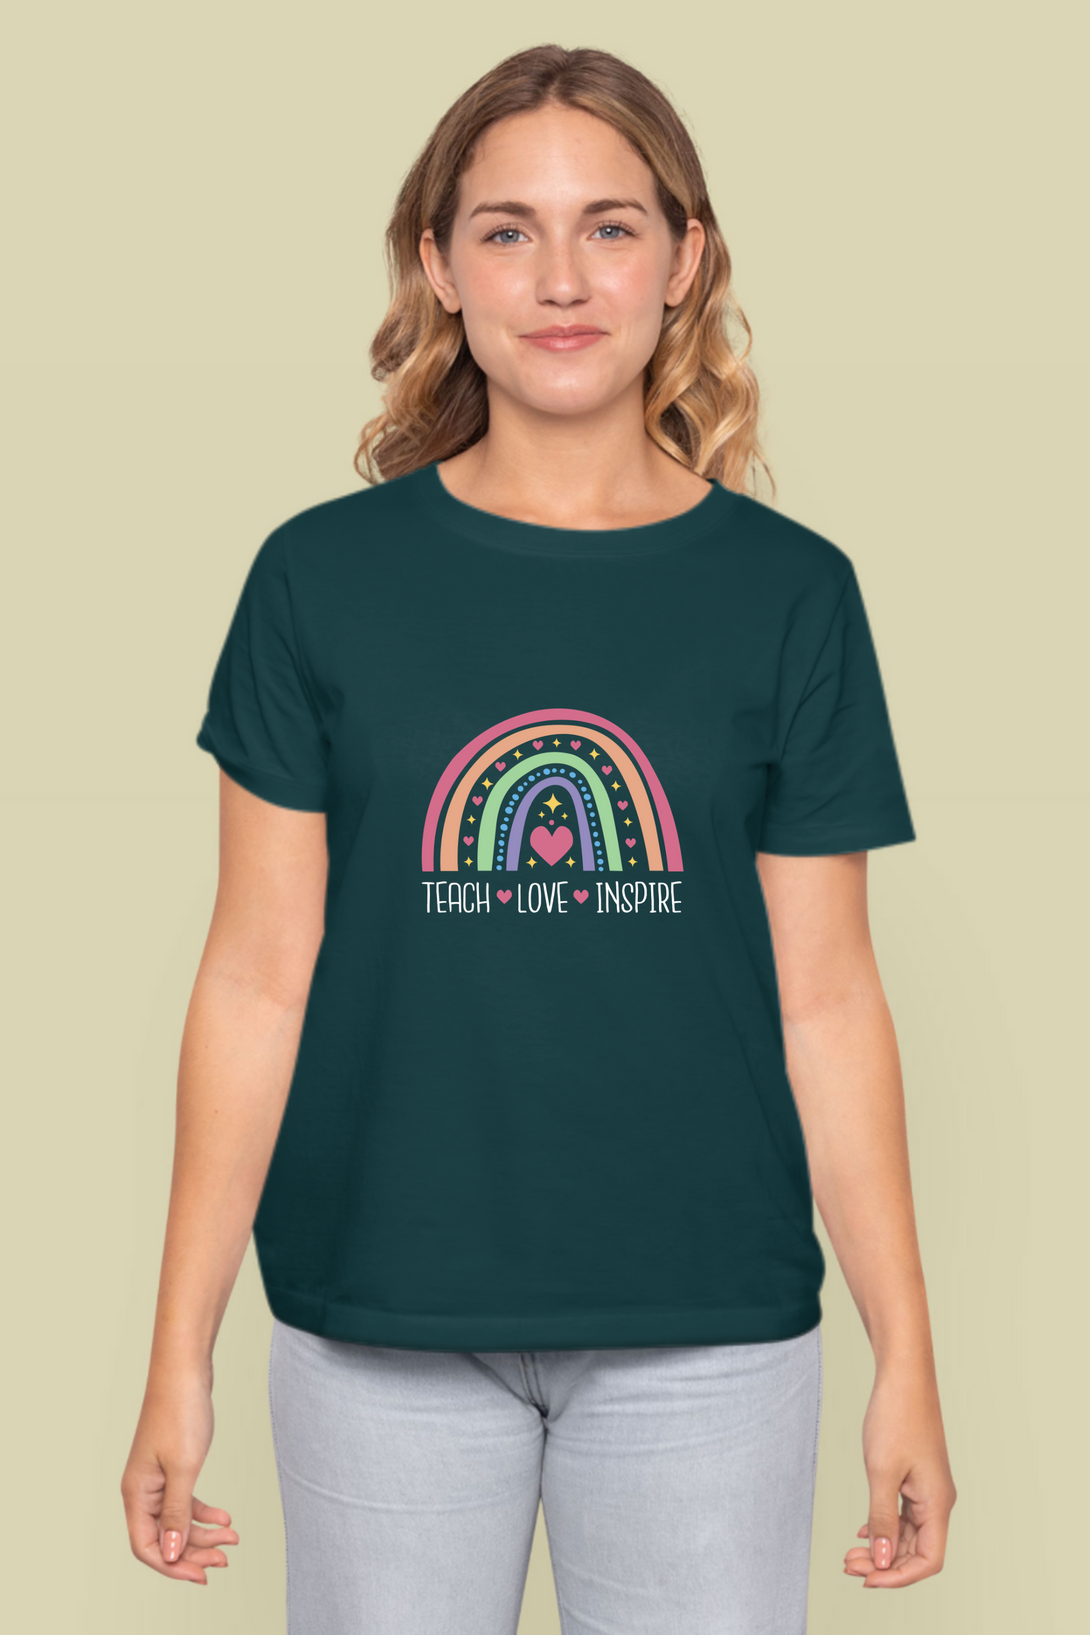 Teach, Love, Inspire Printed T-Shirt For Women - WowWaves - 8